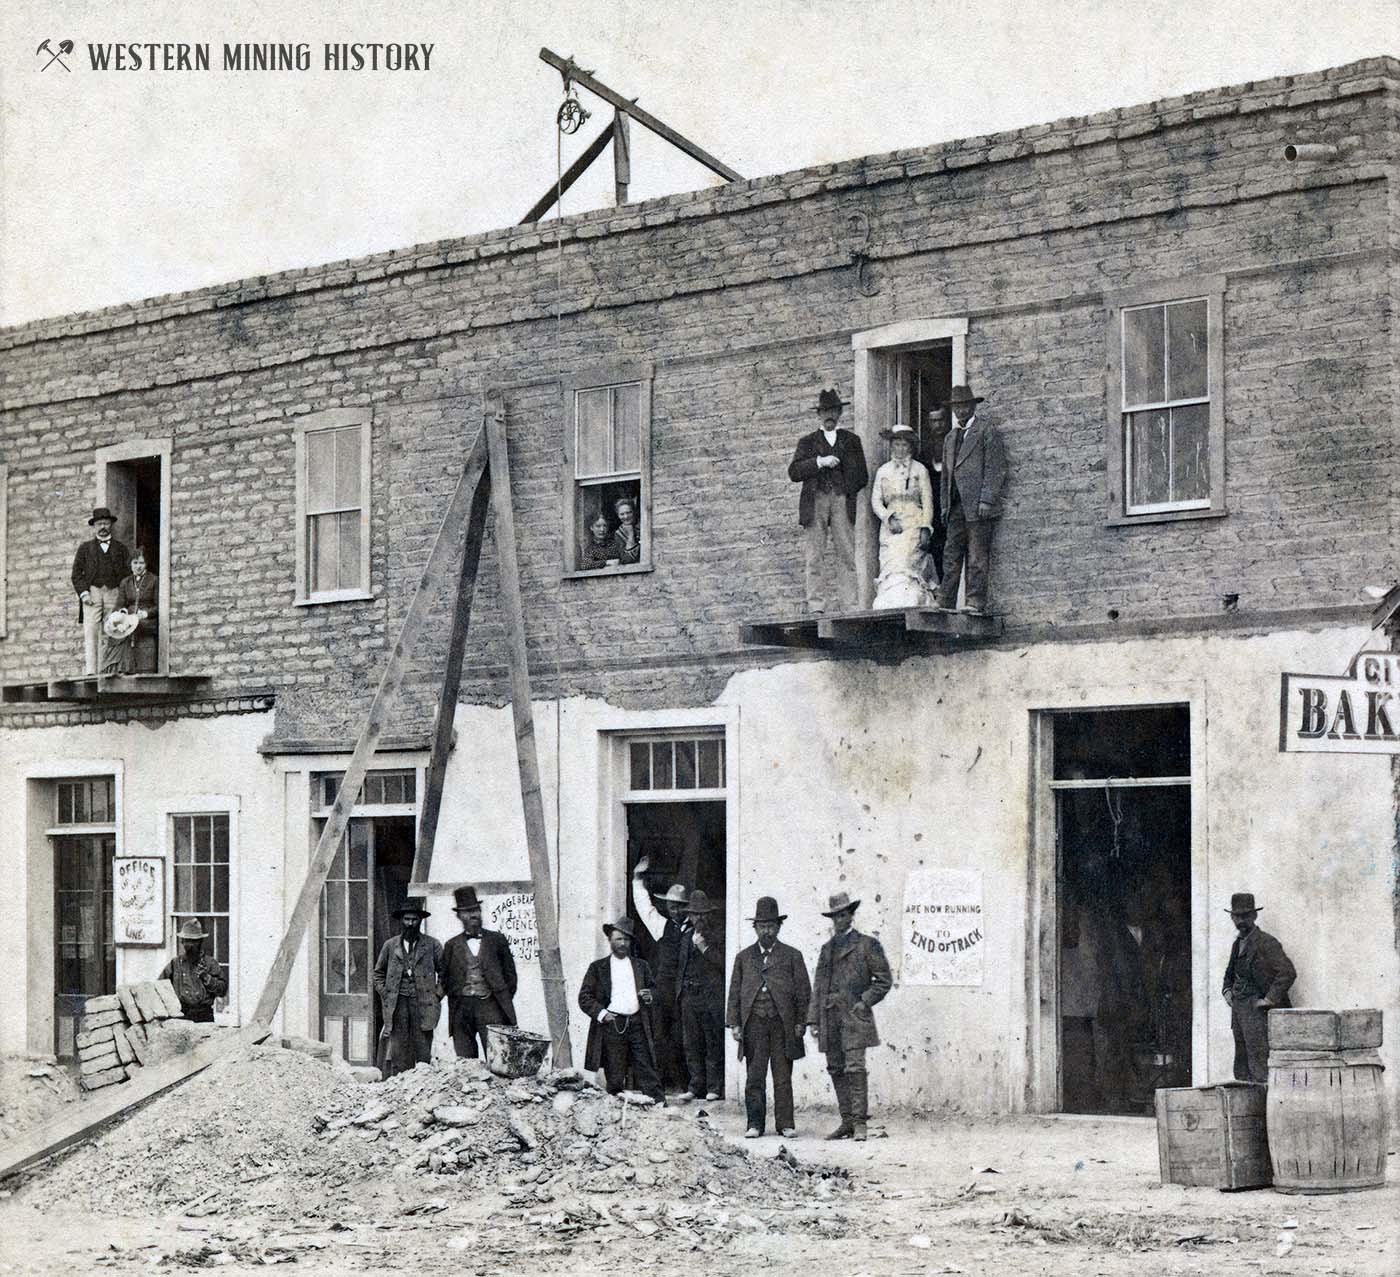 Construction of the Cosmopolitan Hotel - Tombstone, Arizona 1880